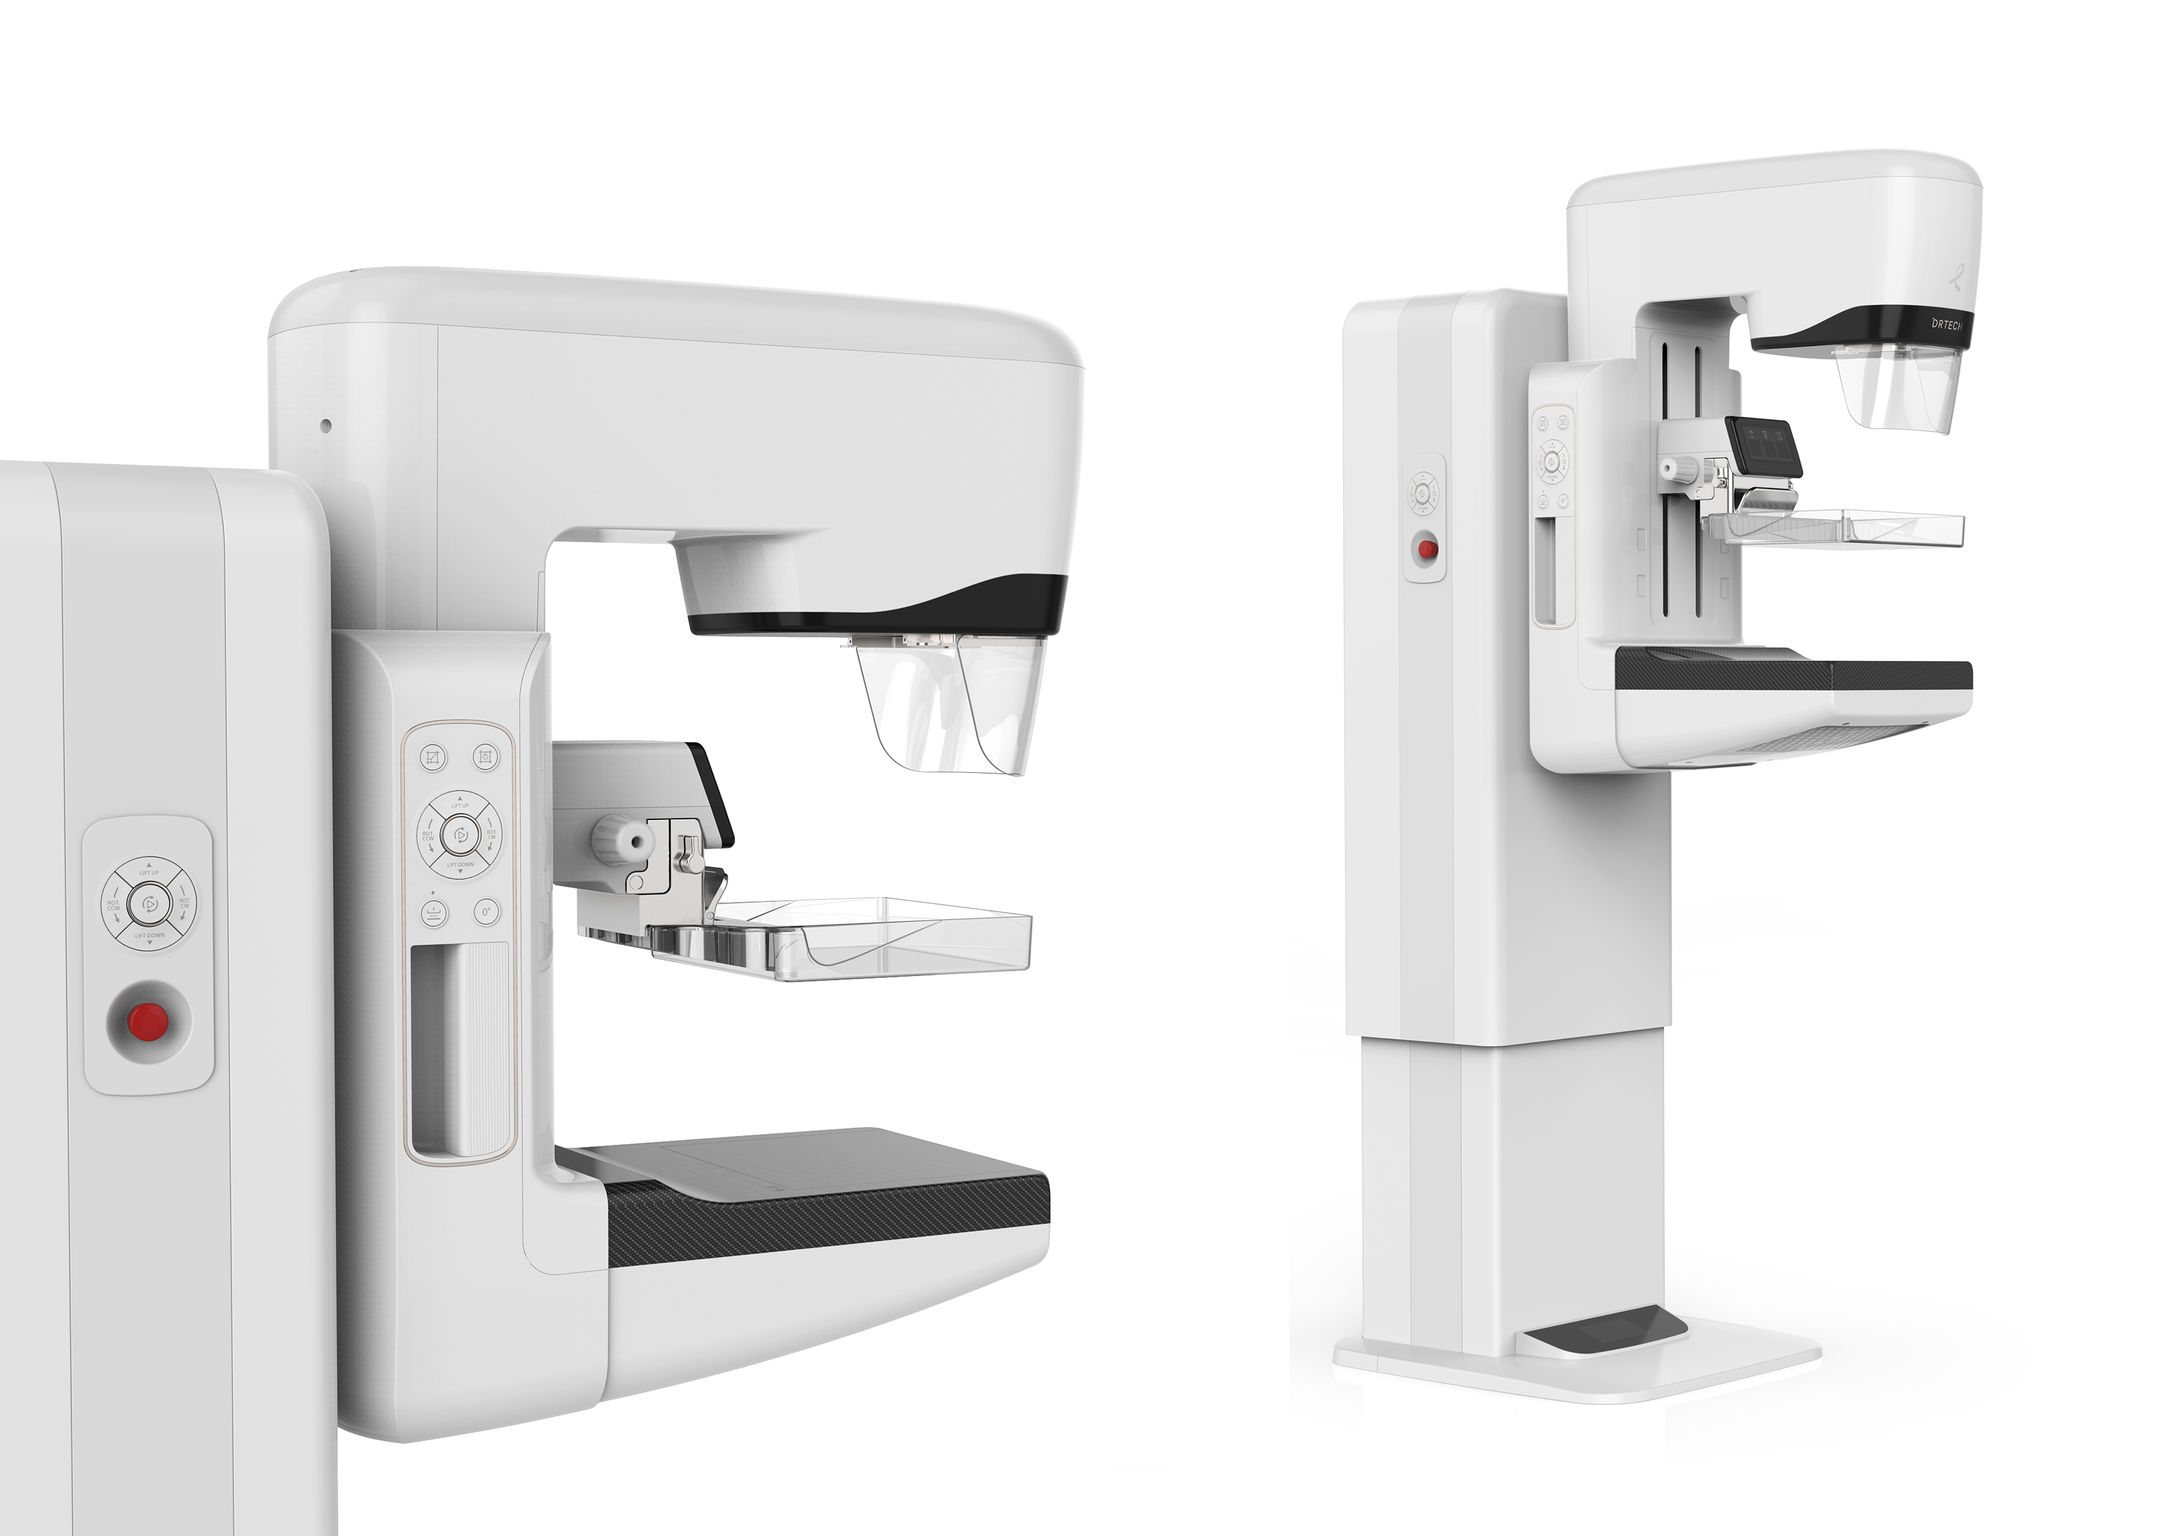 AiDiA Full Field Digital Mammography